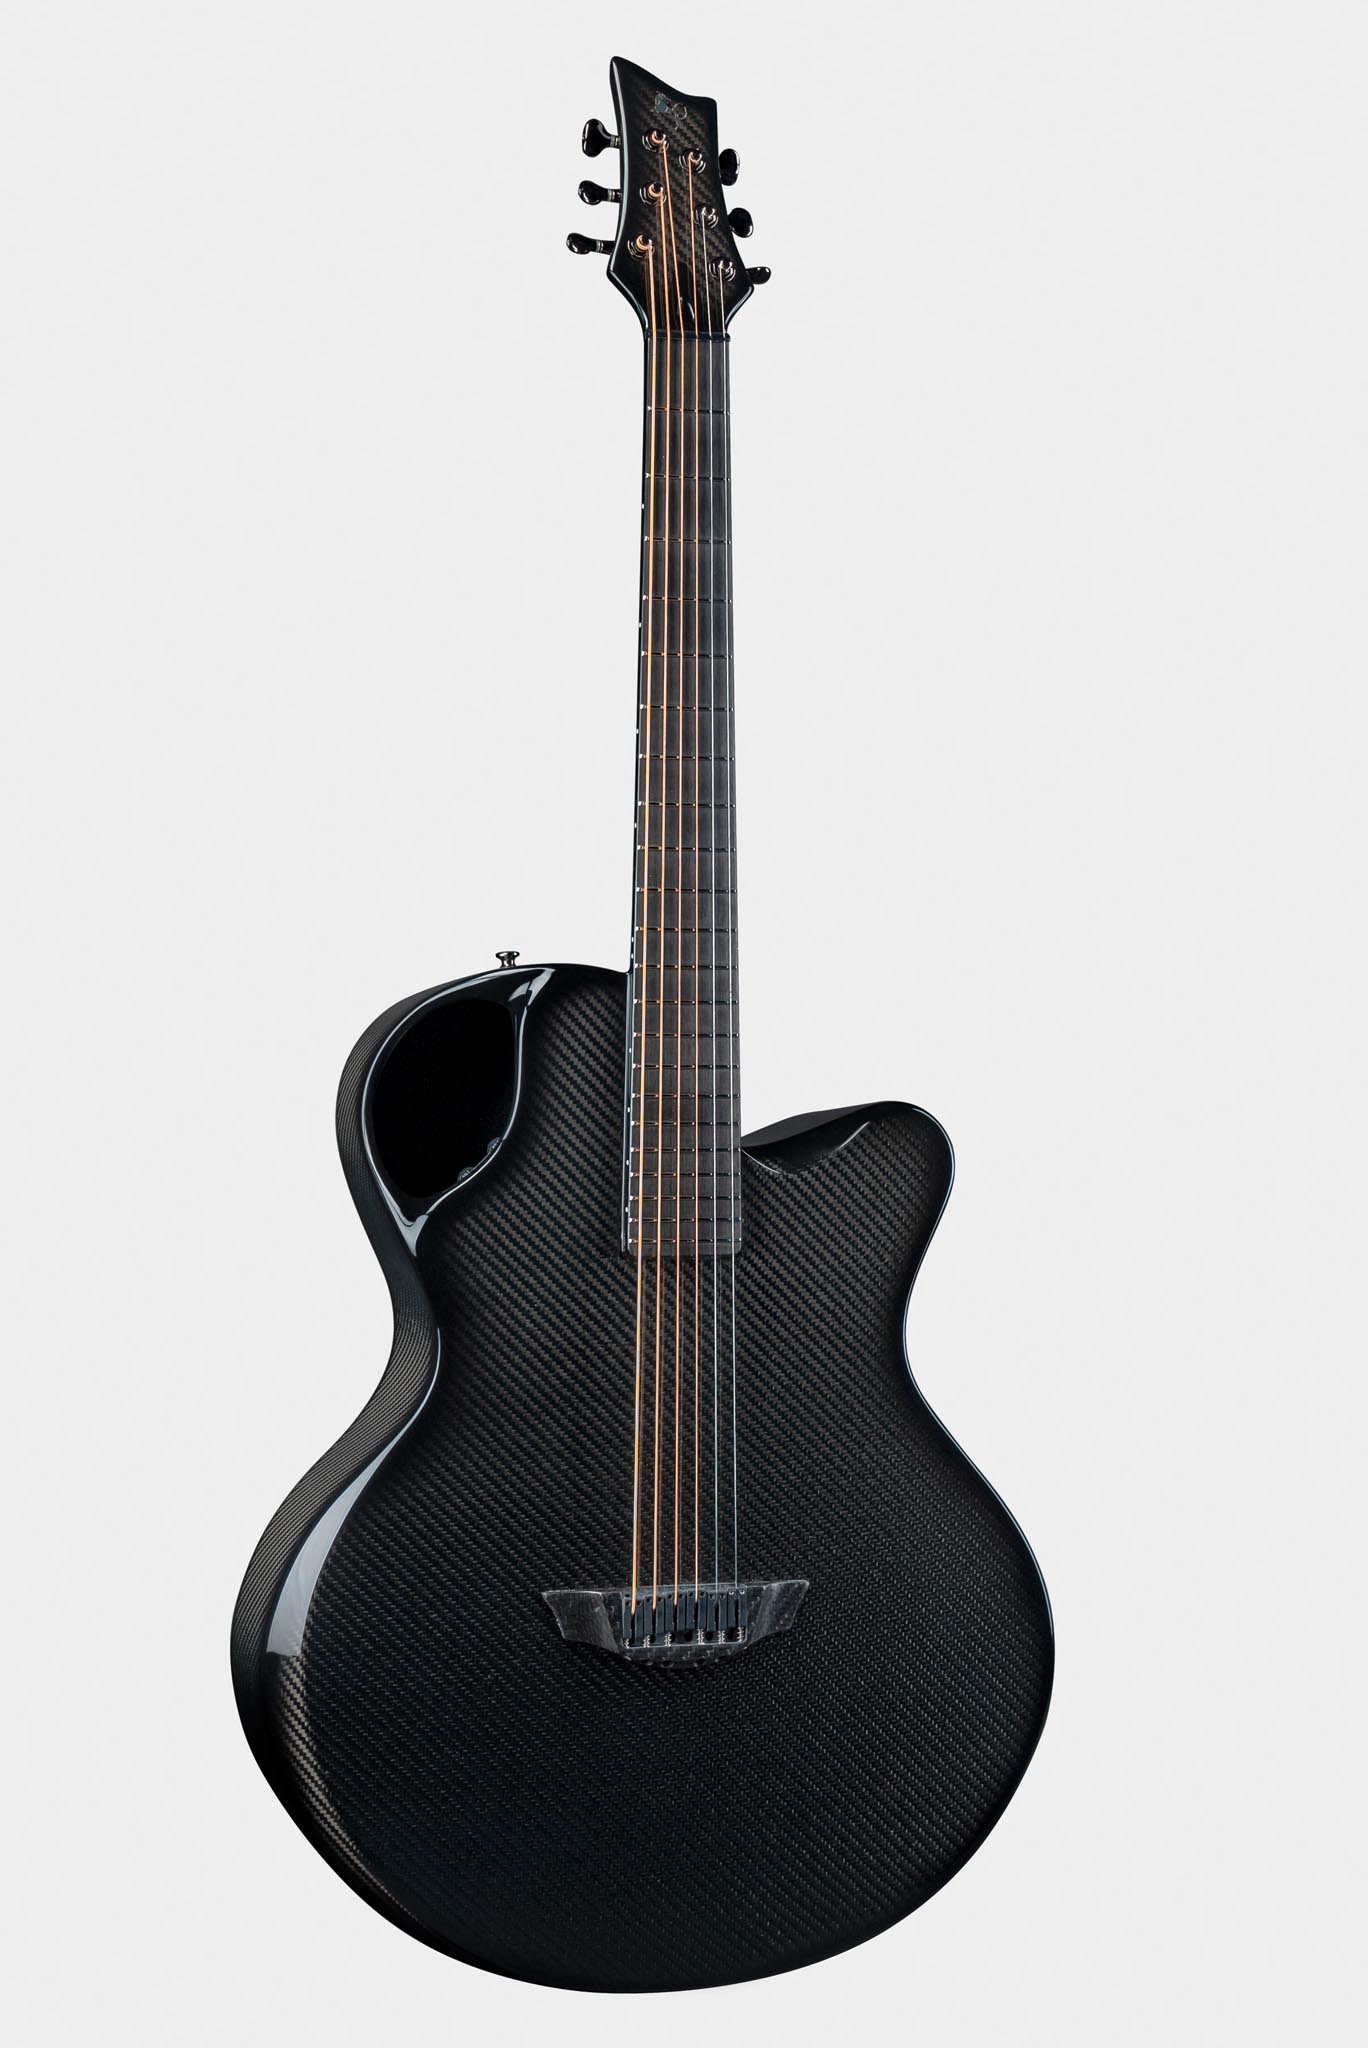 Emerald X30 Carbon Fiber Guitar in Black